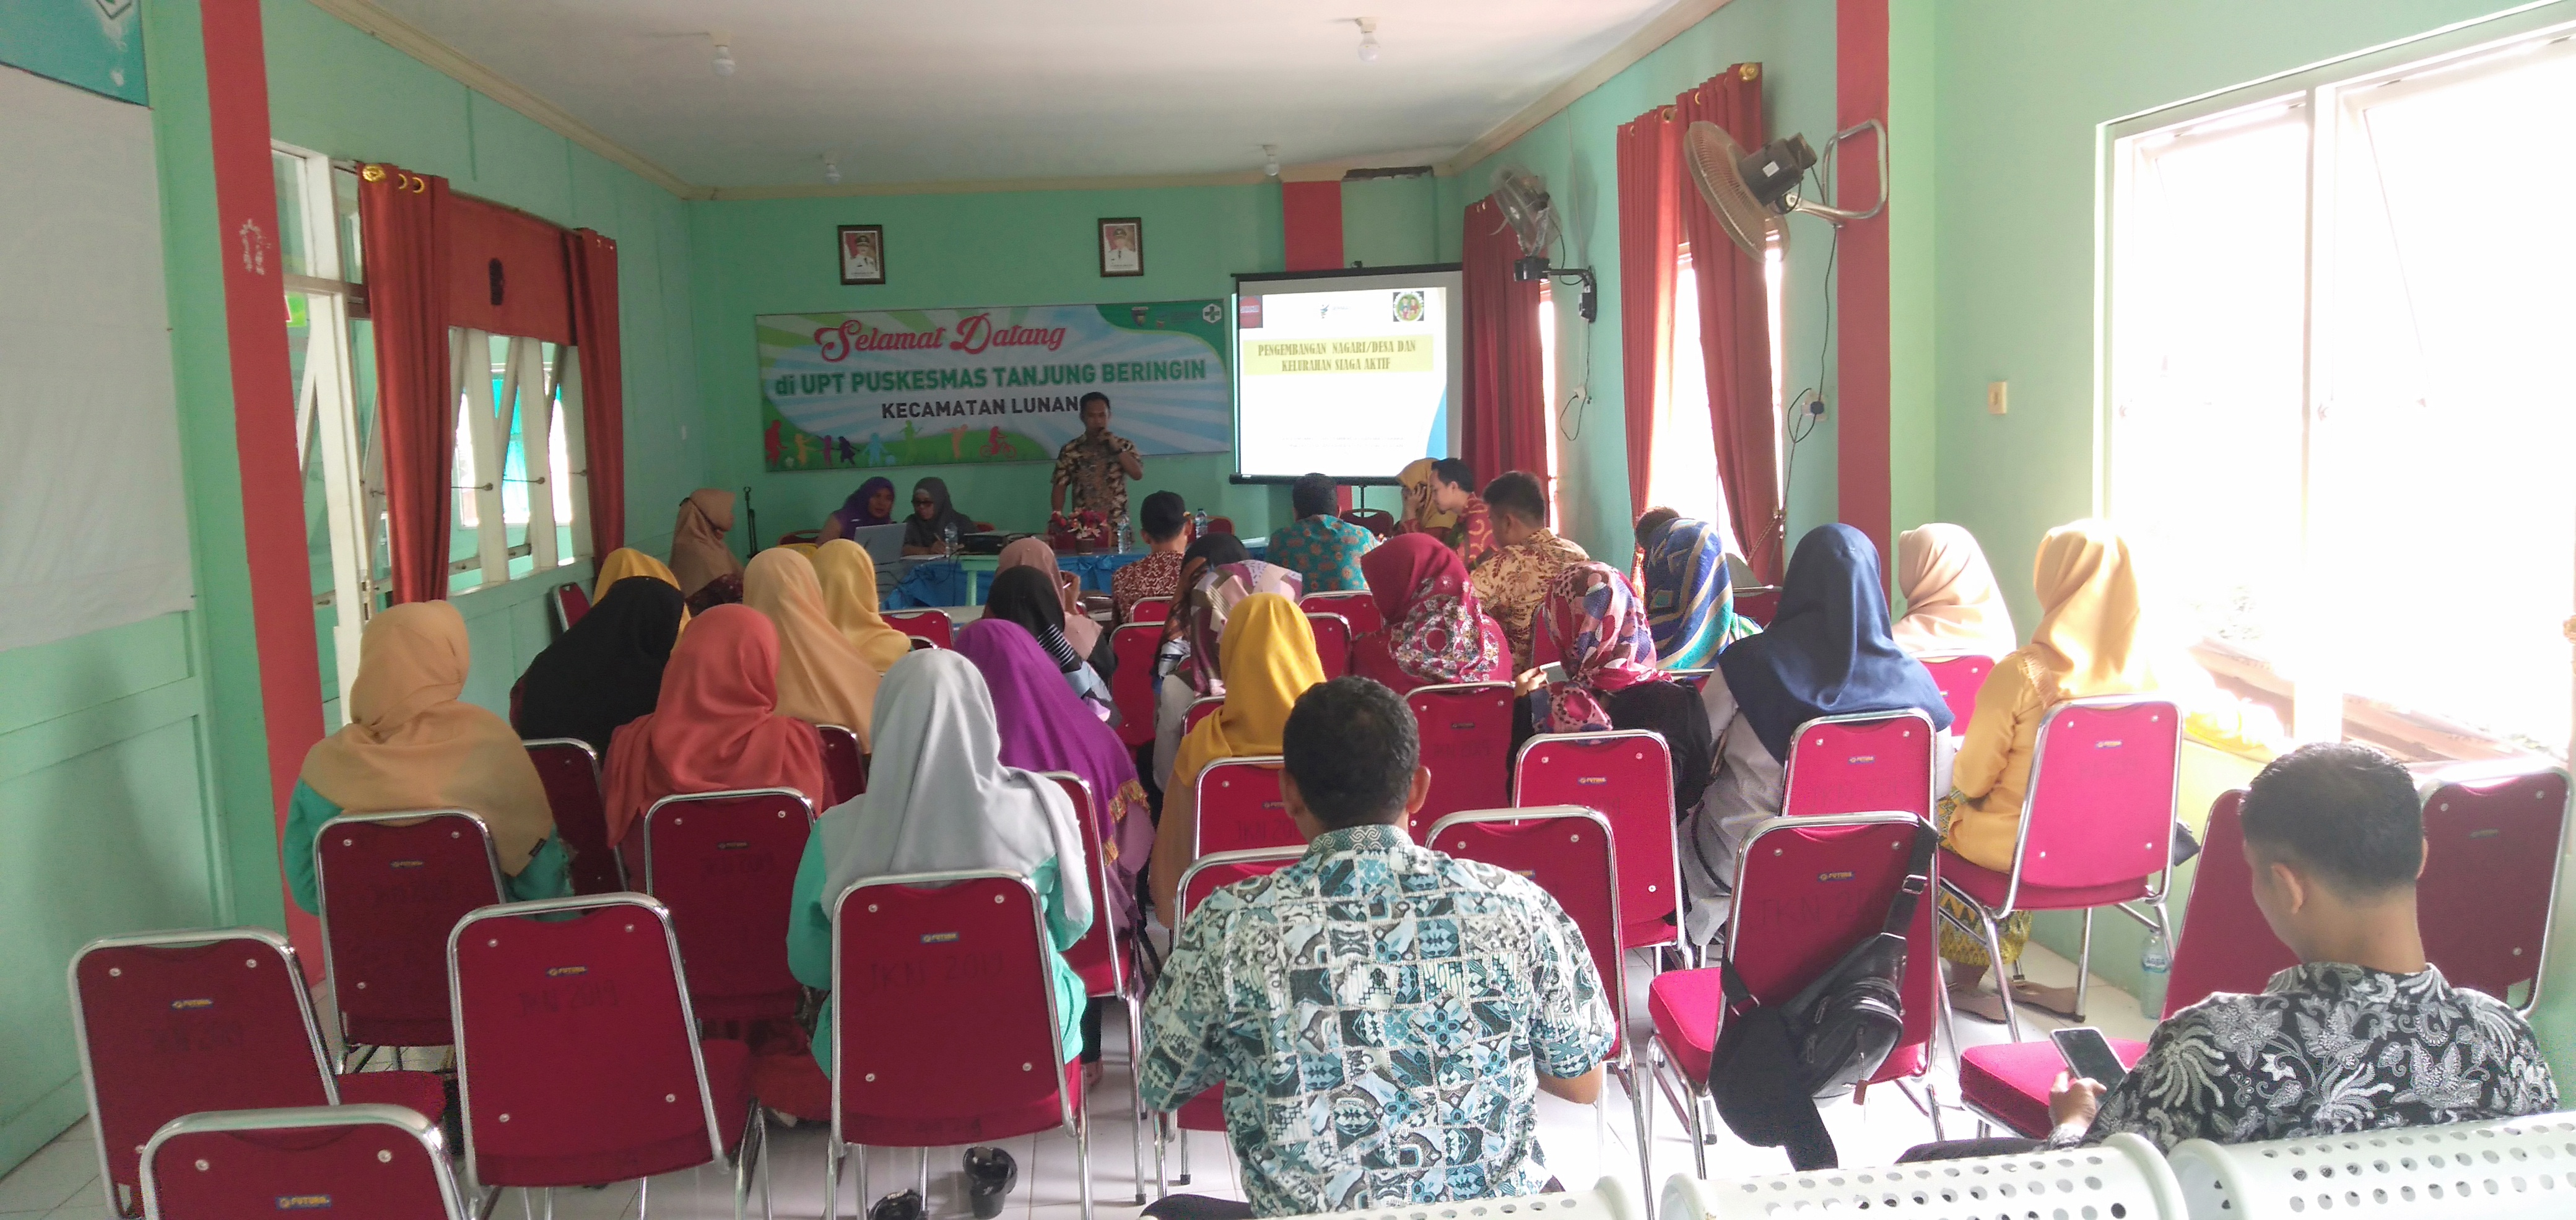 Monev dan sosialisasi Nagari siaga  di Puskesmas Tanjung Beringin 